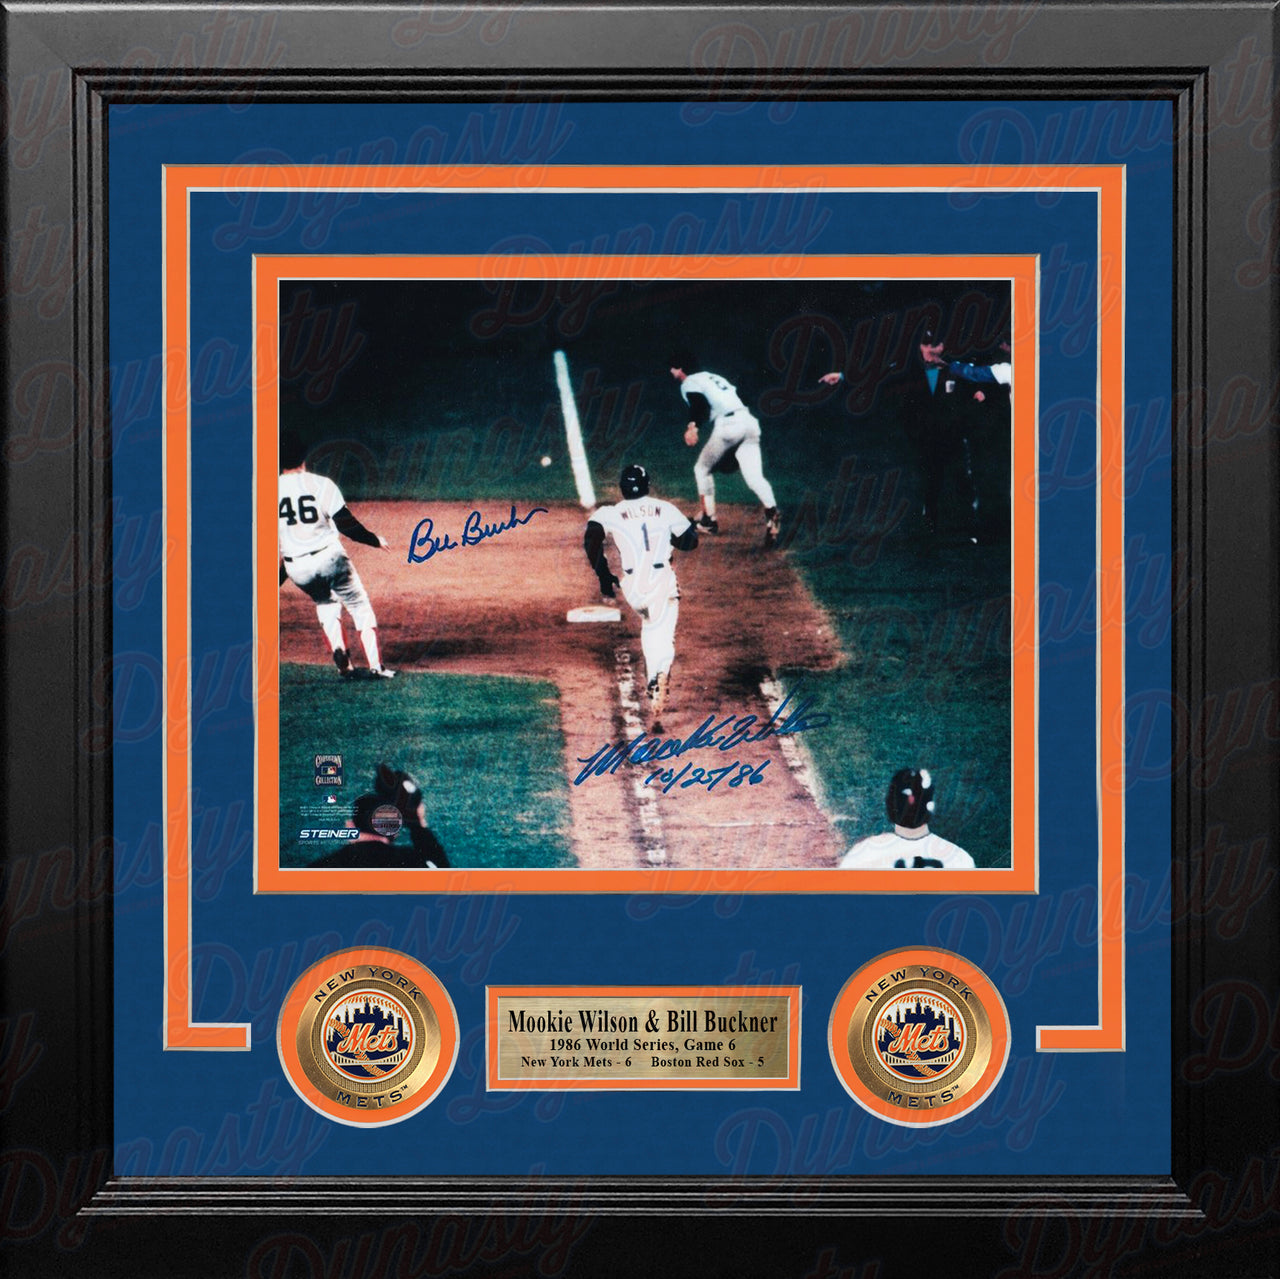 Mookie Wilson & Bill Buckner 1986 World Series New York Mets Autographed 8x10 Framed Baseball Photo - Dynasty Sports & Framing 